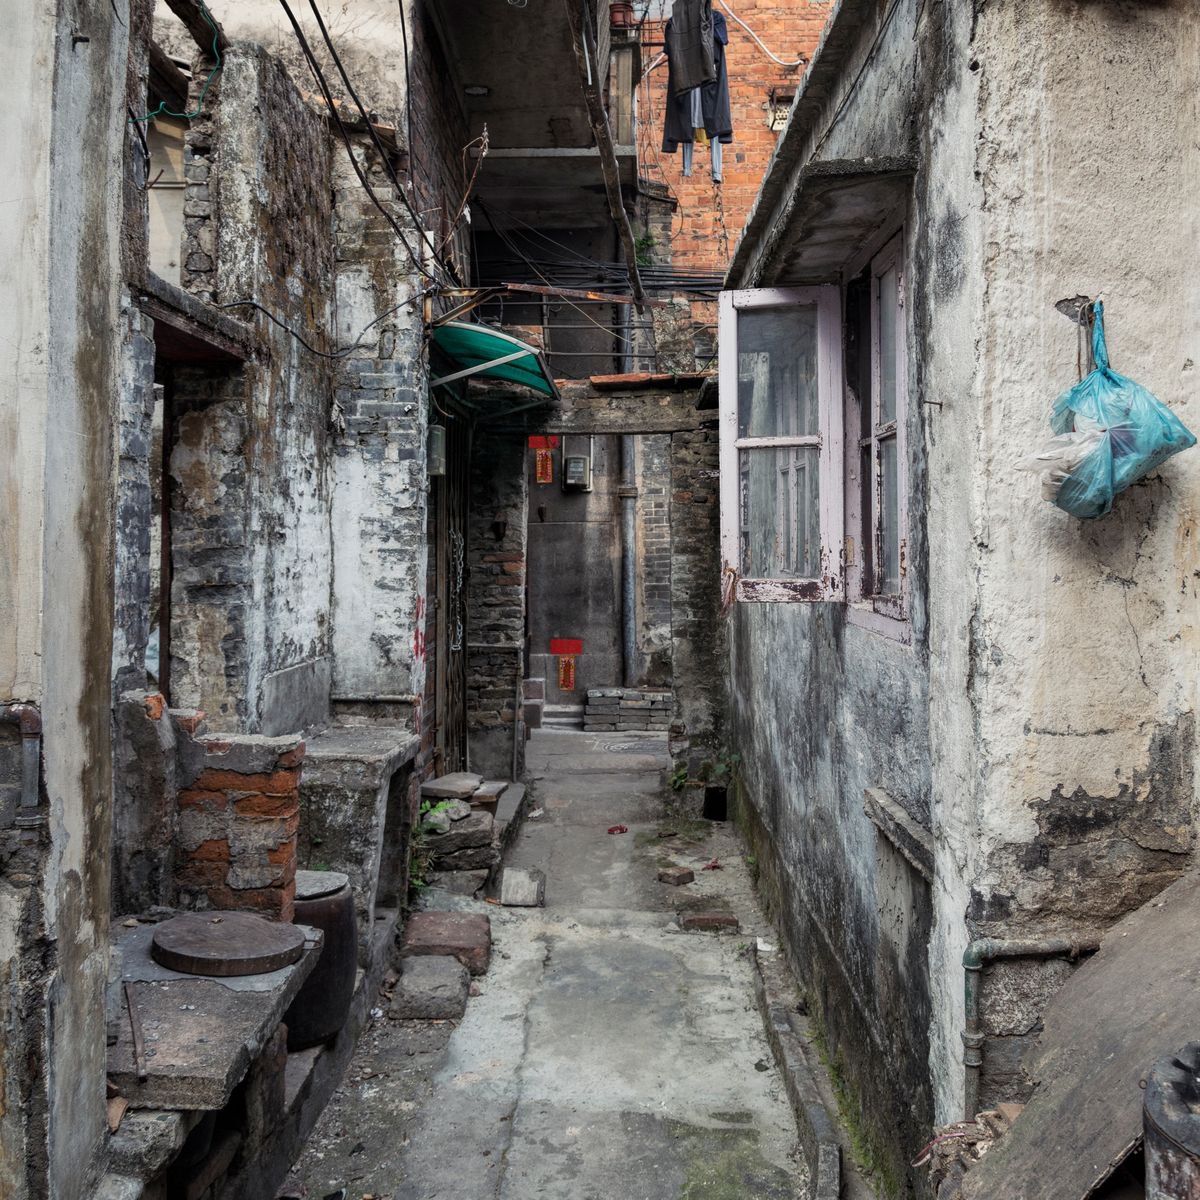 Urban Villages of Guangzhou #1 by Serge Horta